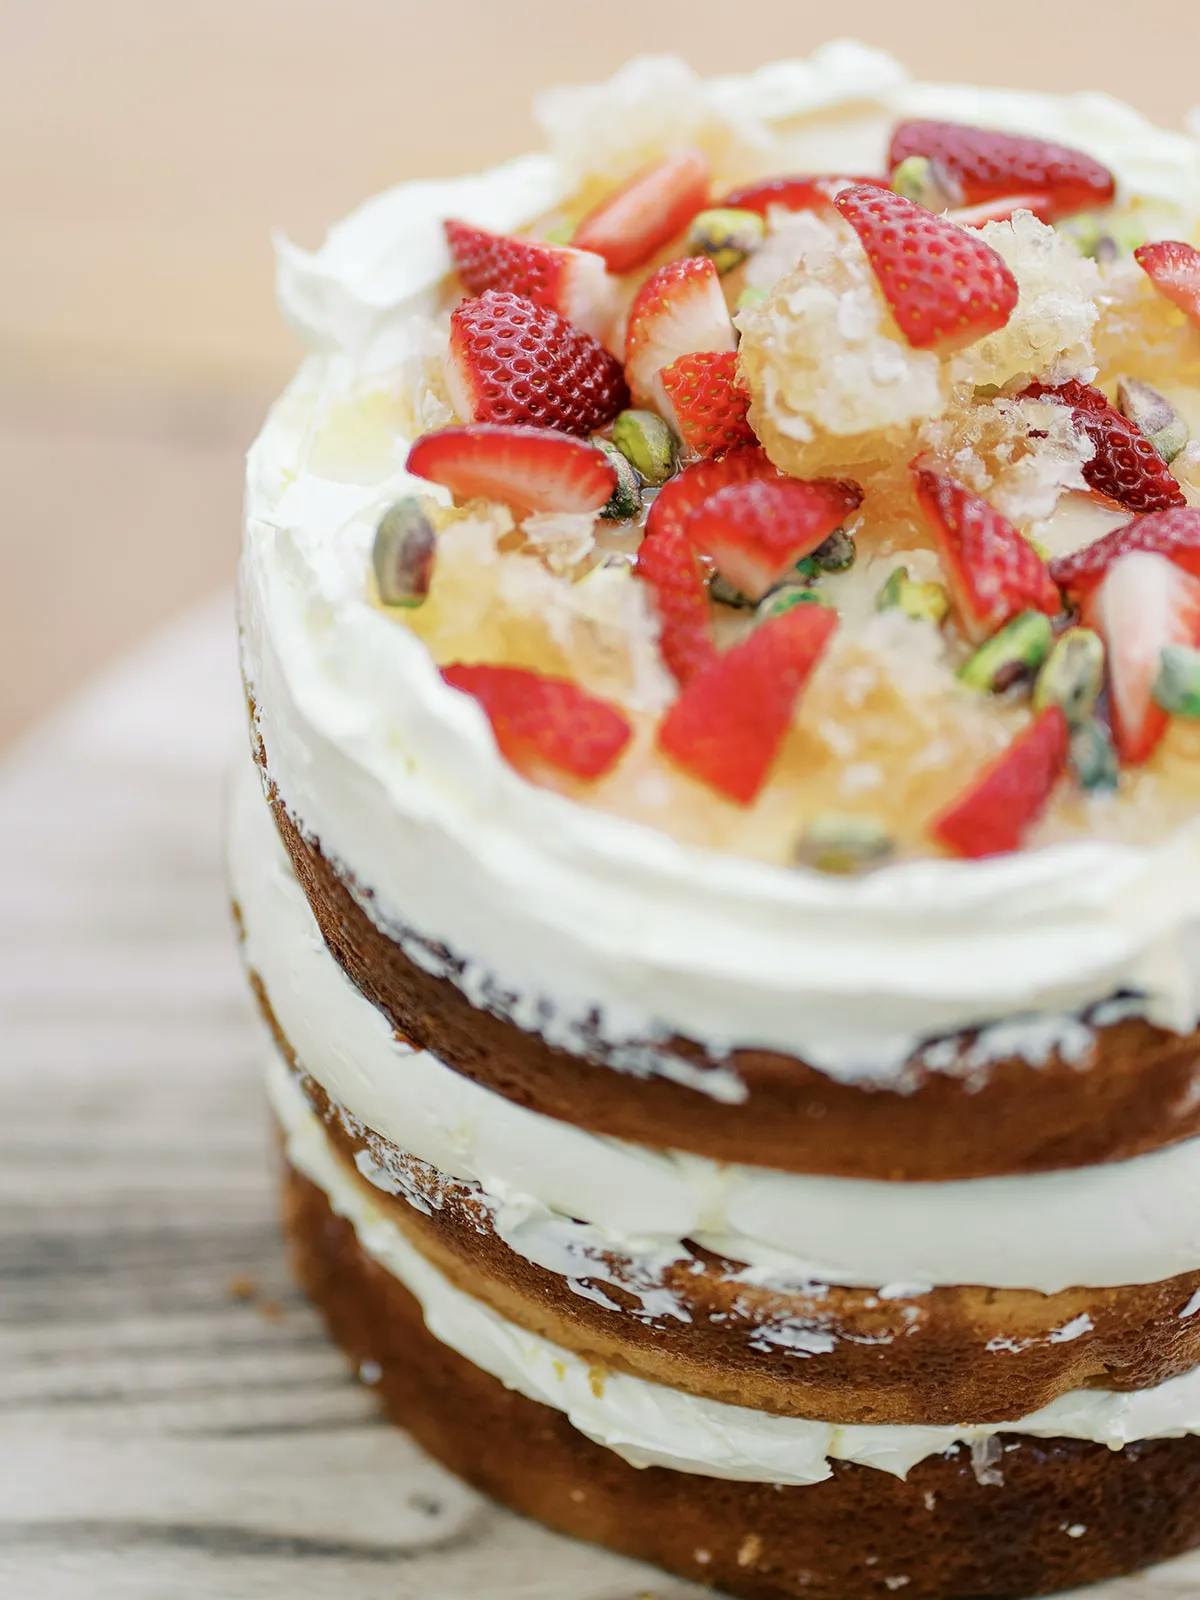 Wedding cake with fruit on top